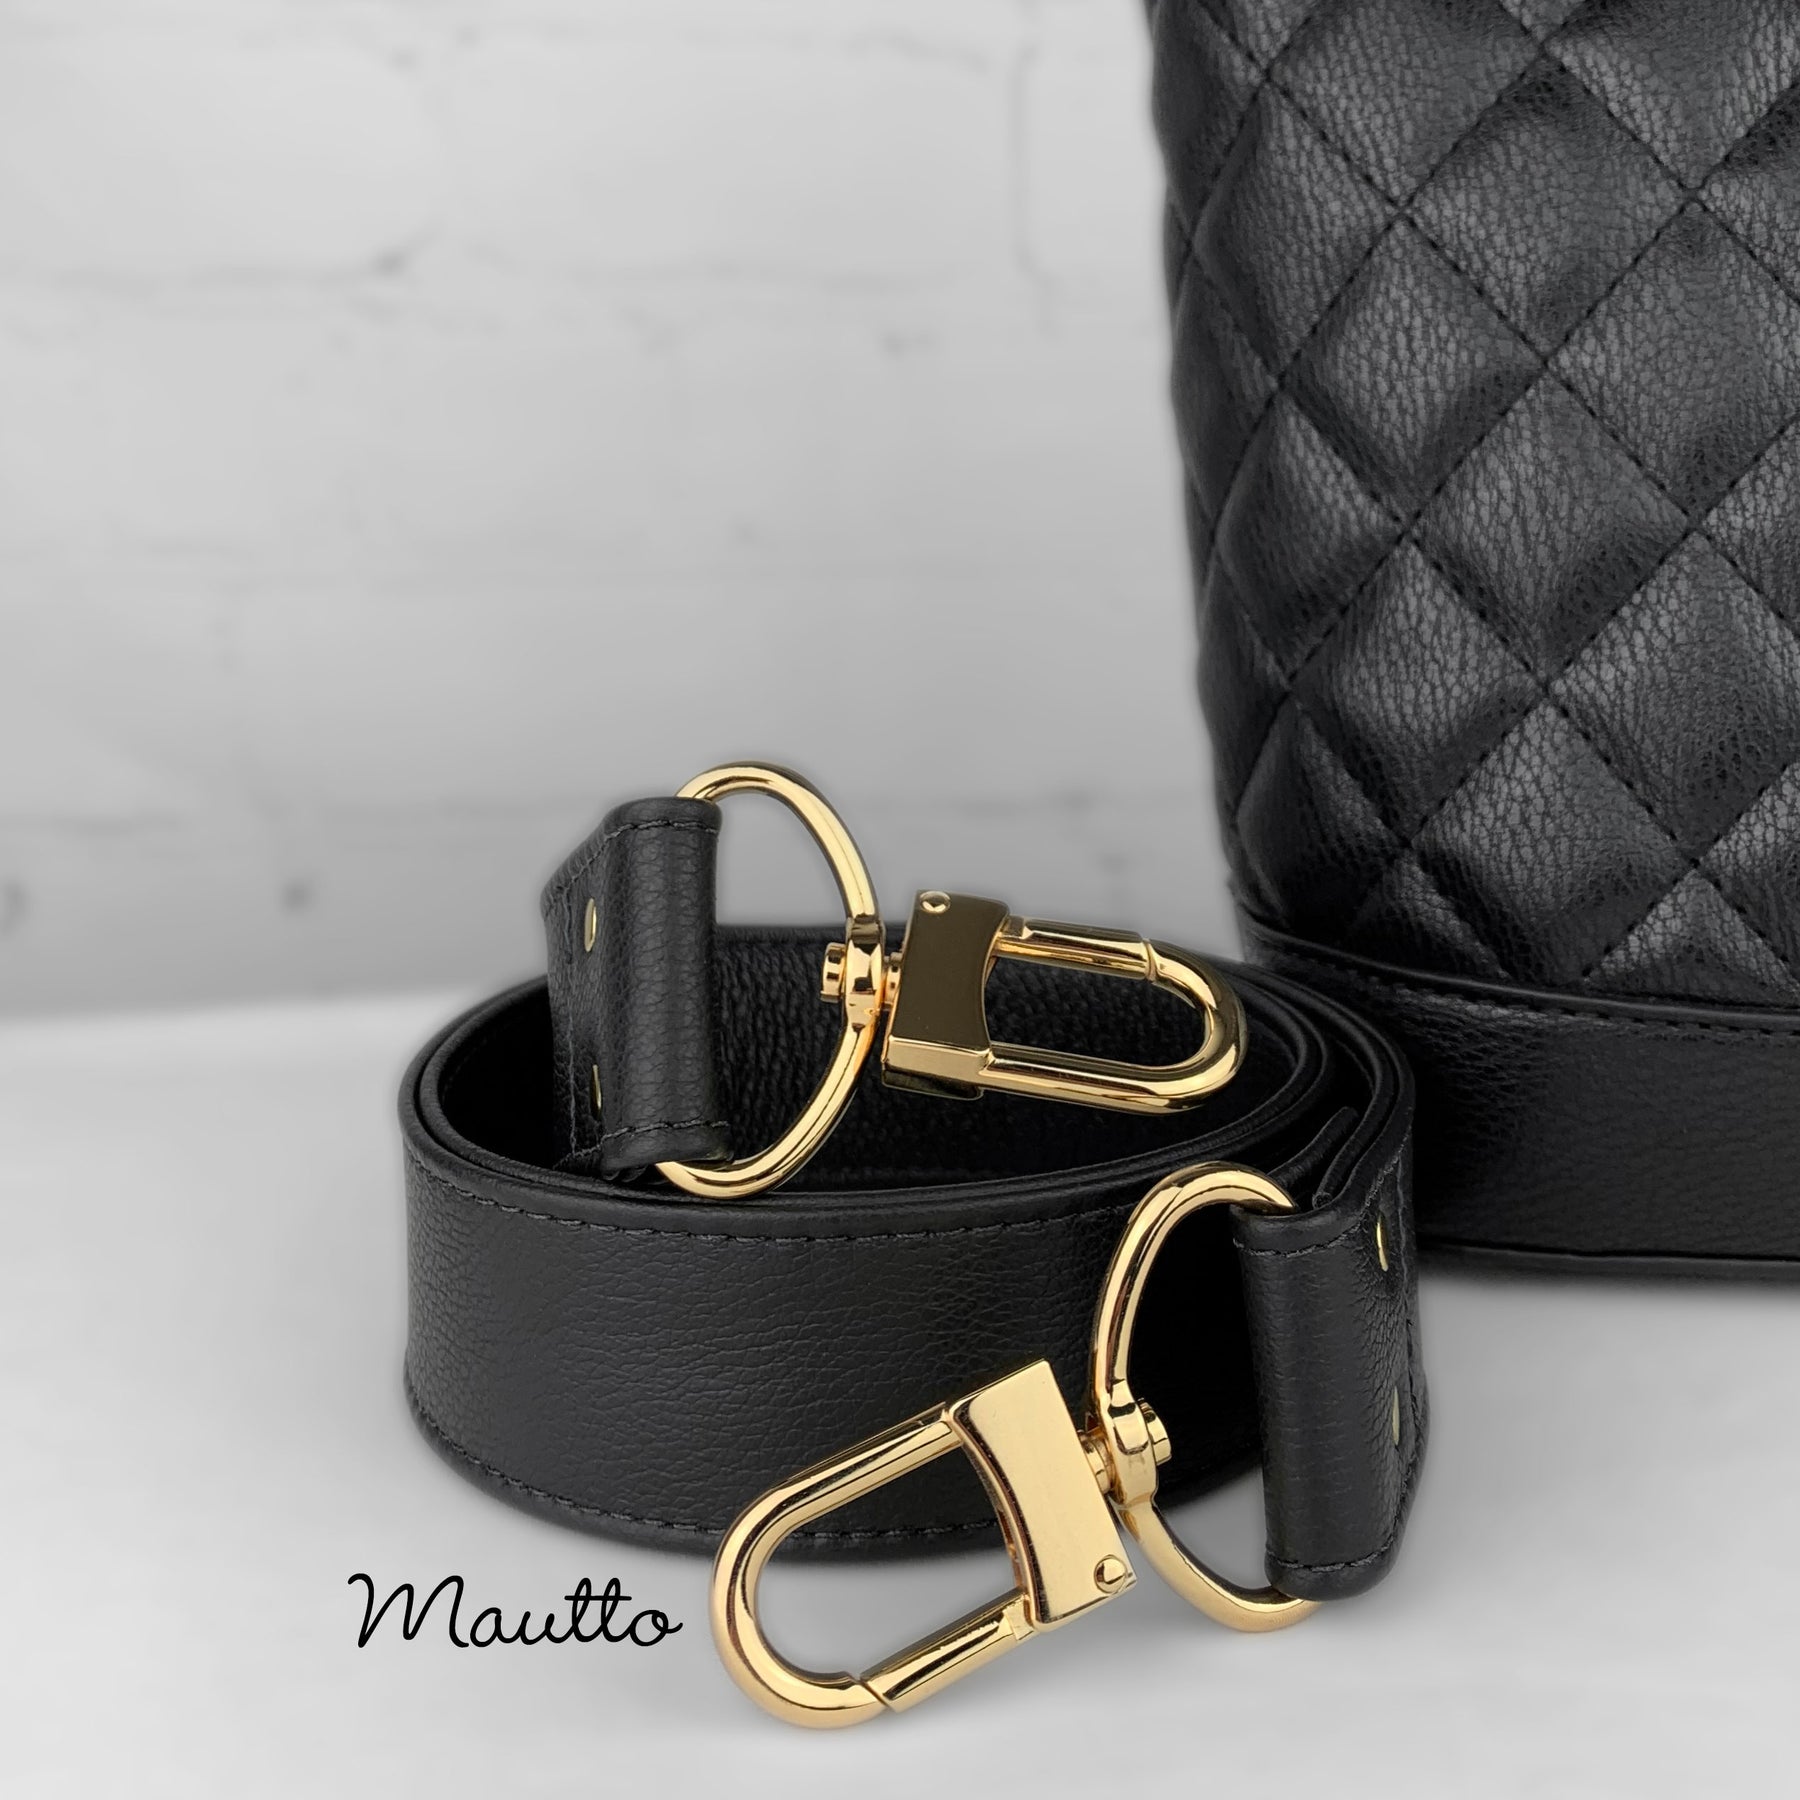 Wide Leather Shoulder Strap - Choose Leather Color & Gold-tone